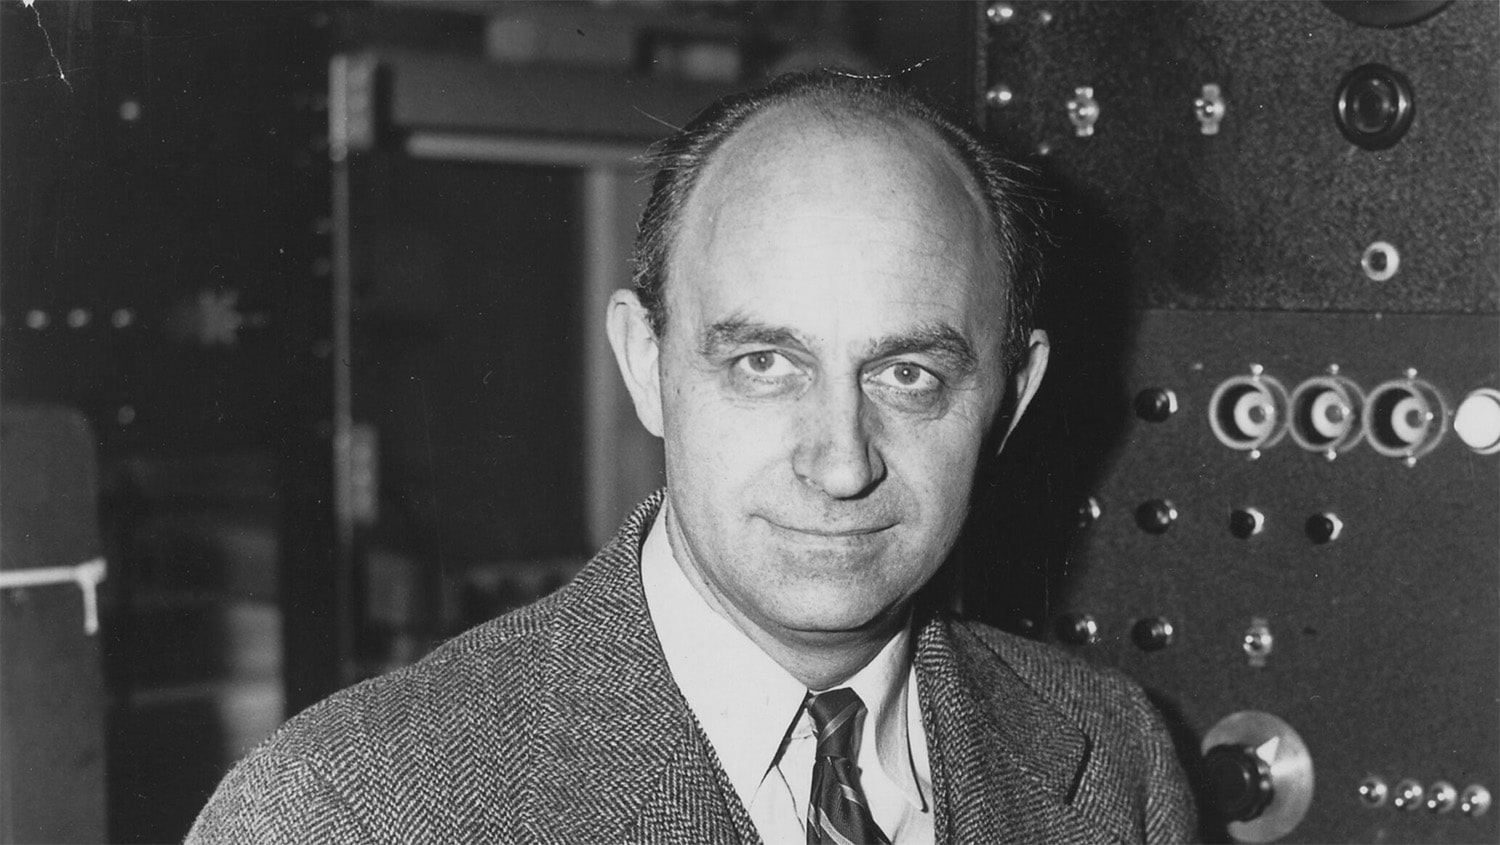 28 interesting facts about Enrico Fermi